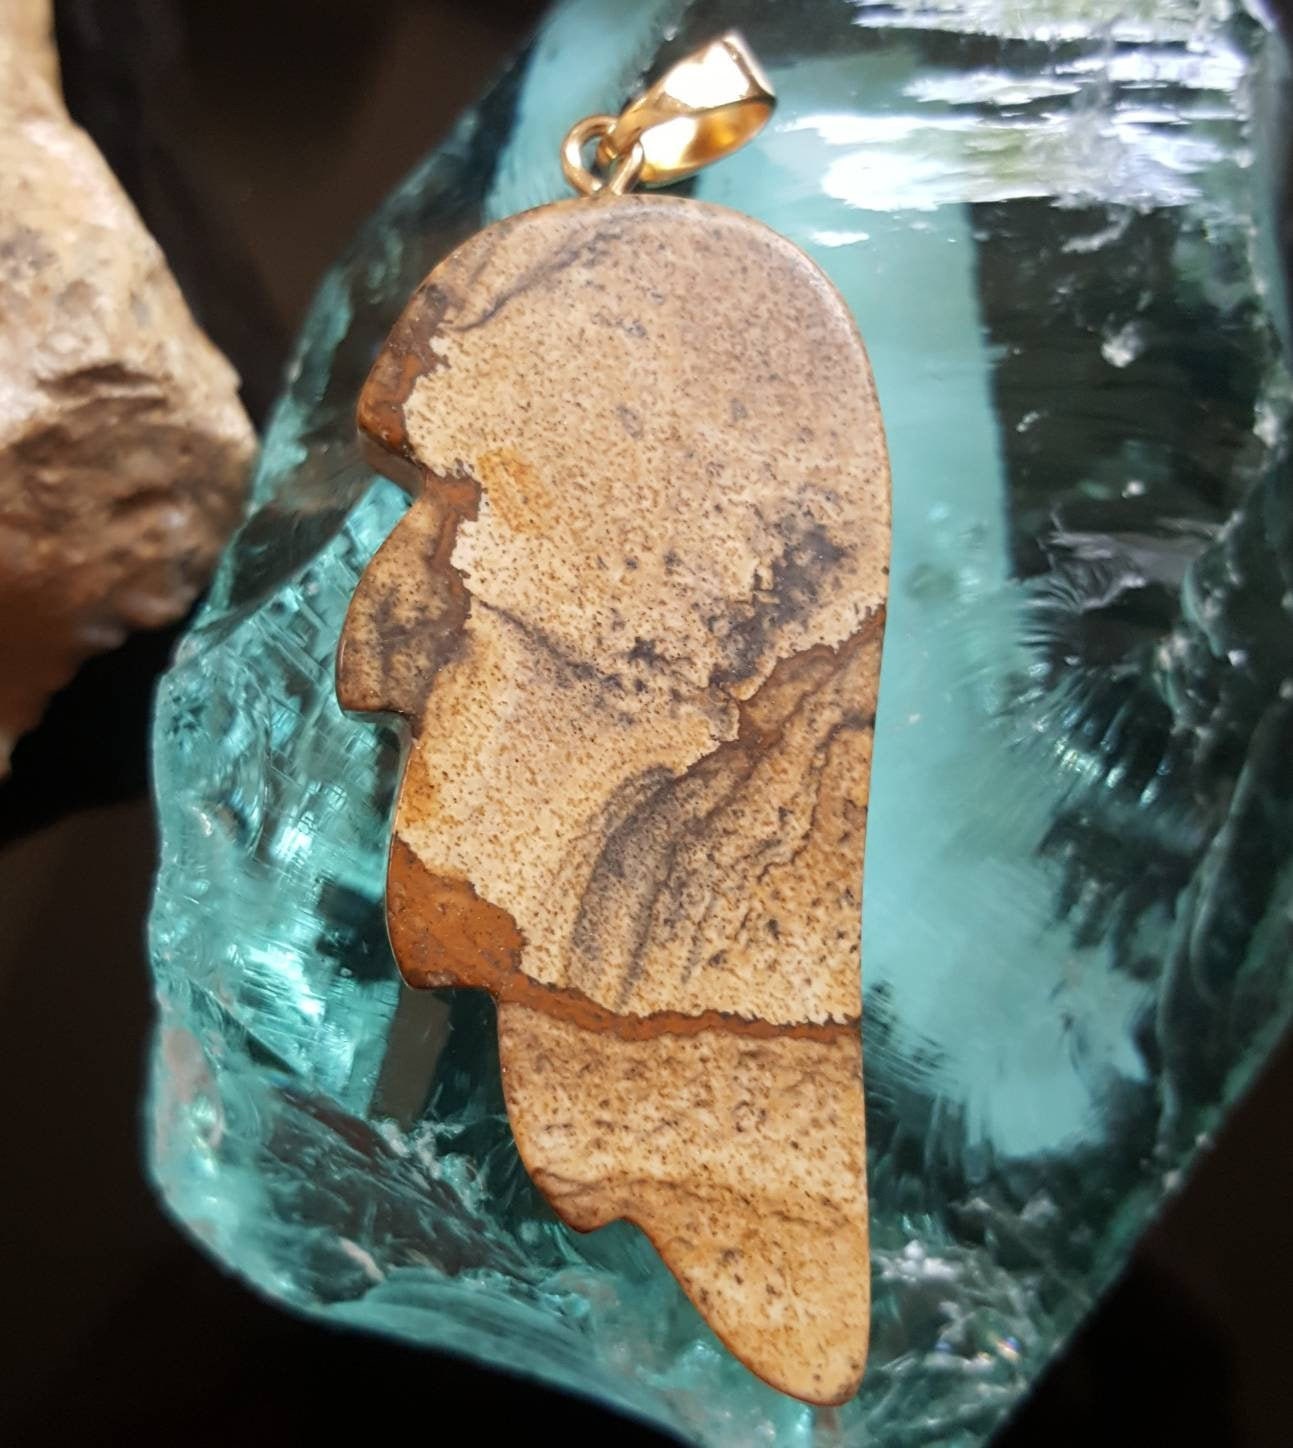 earth tone stone pendant jasper focal pendant natural stone pendant brown beige tan stone pendant Picture jasper pendant w gold bezel